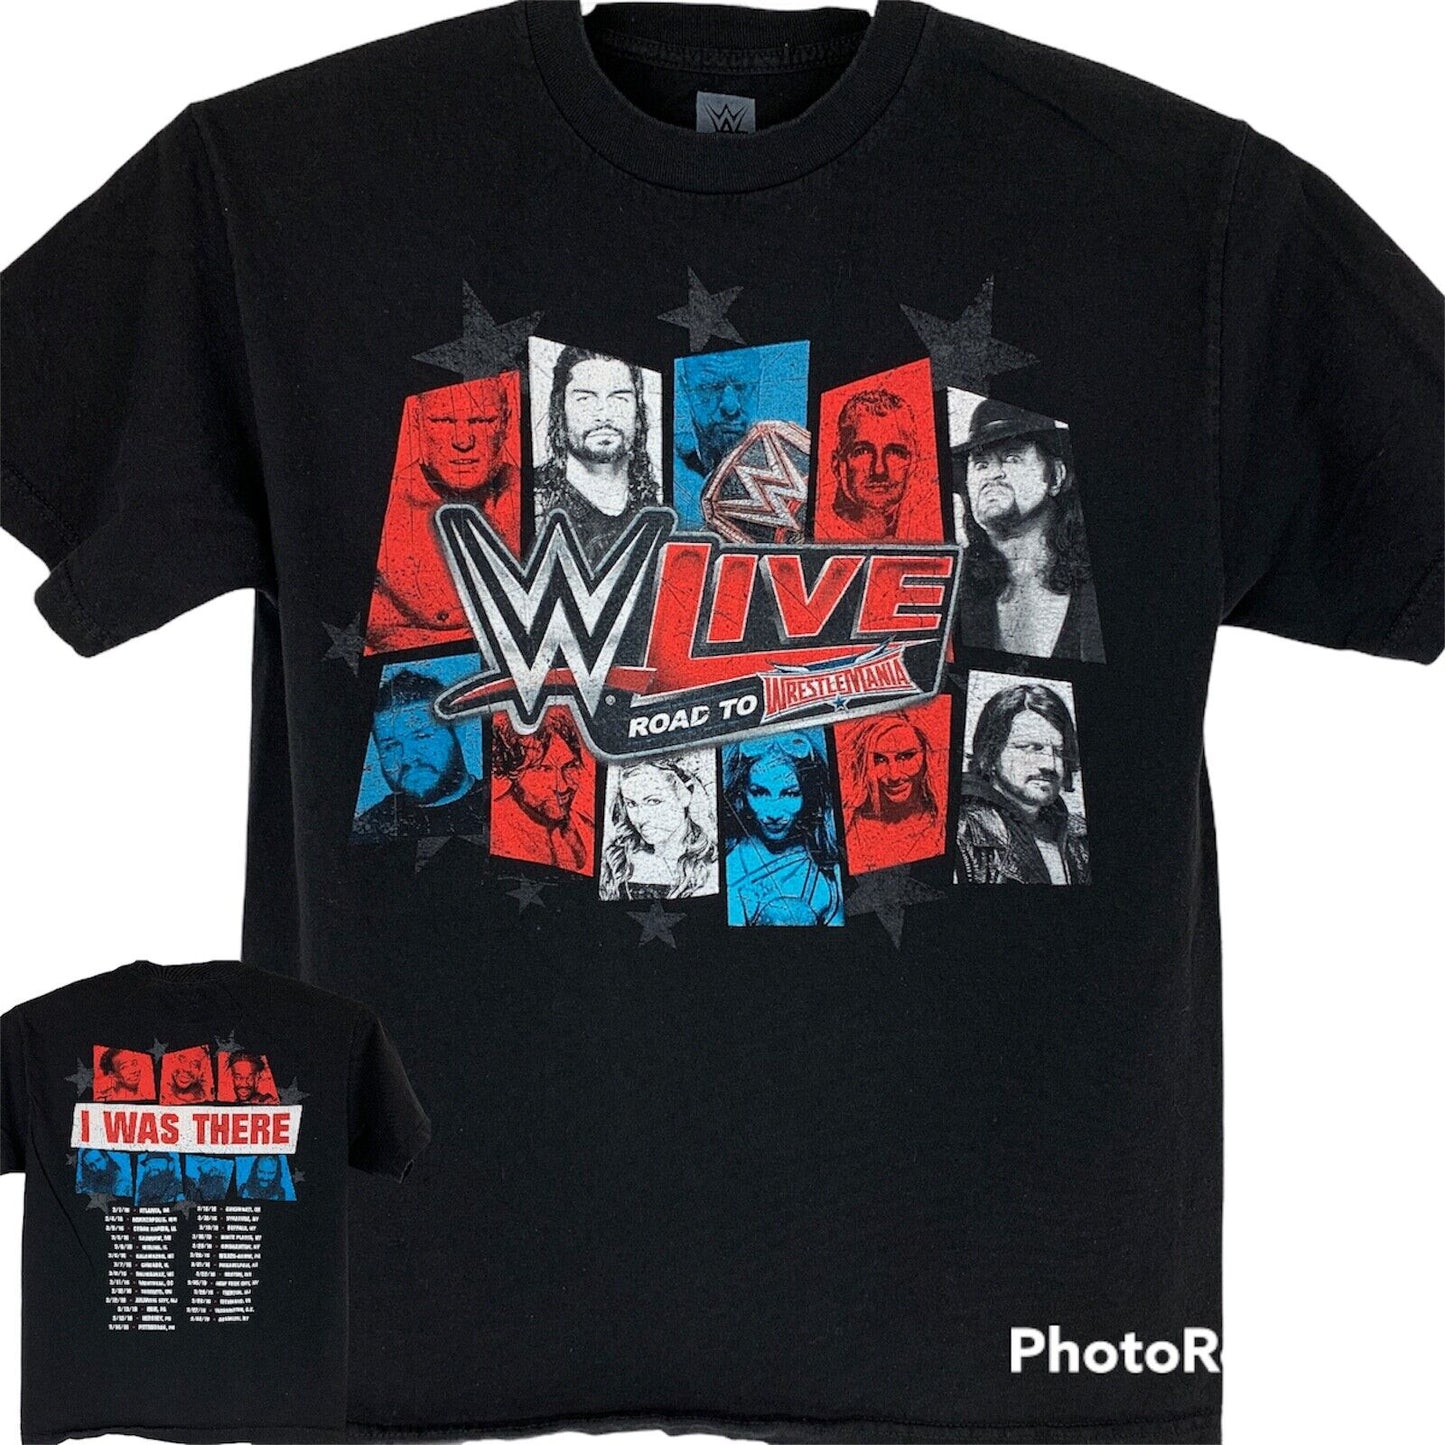 WWE Live Road To Wrestlemania T Shirt 2016 Wrestling Black Graphic Tee Medium